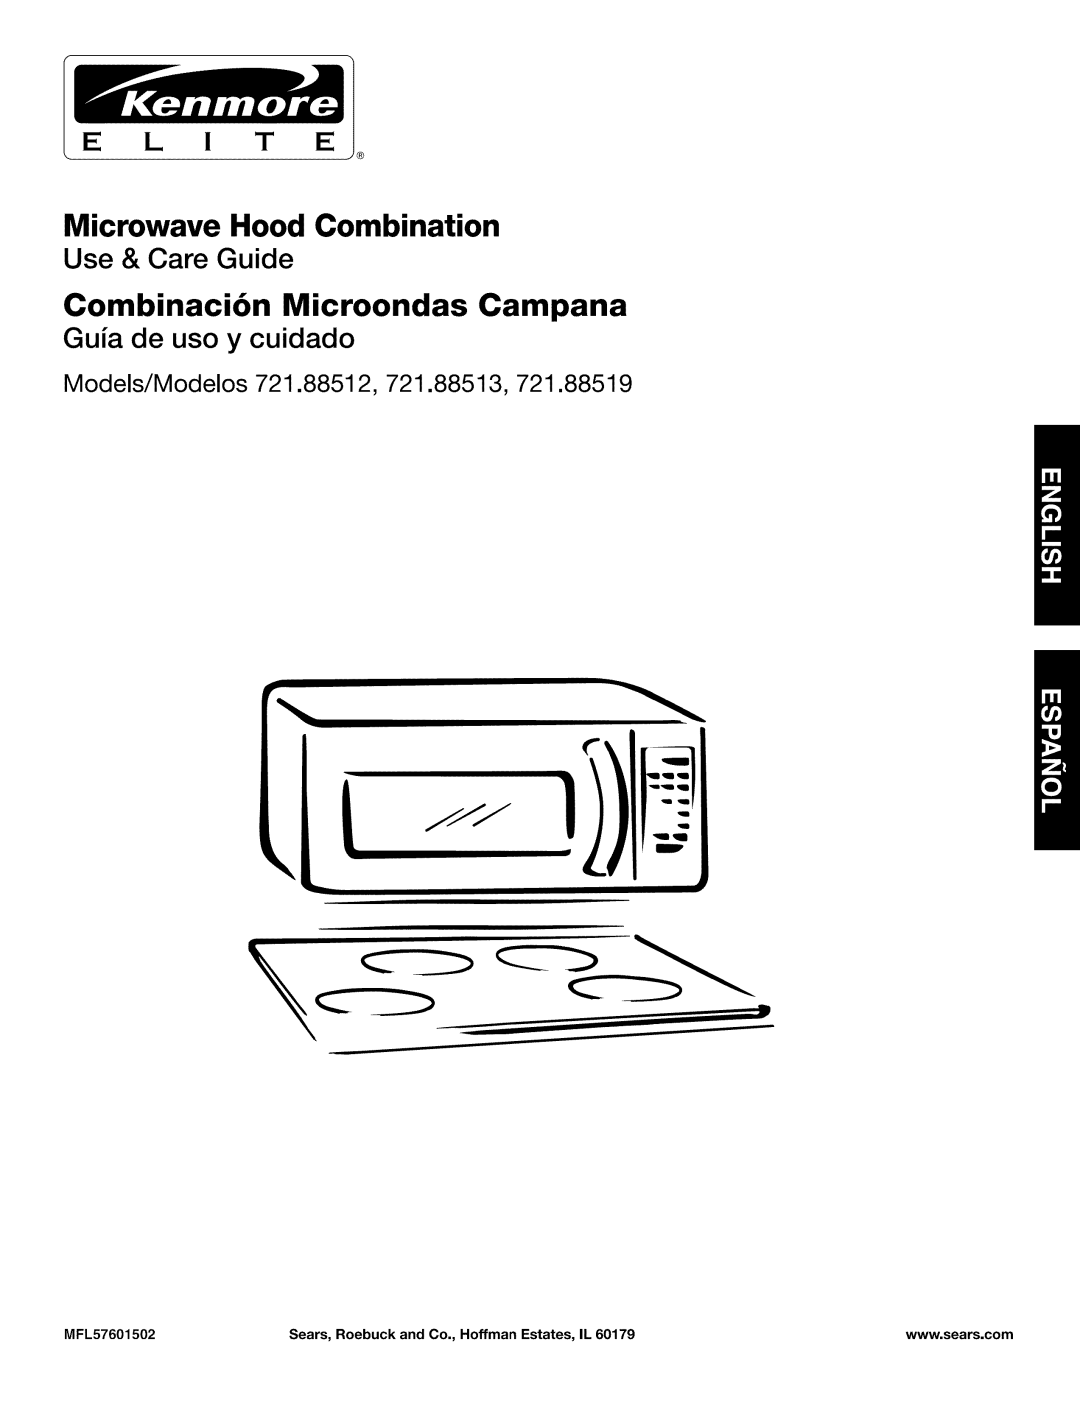 Kenmore 721.88512 manual Microwave Hood Combination Use & Care Guide, Combinacibn Microondas Campana, E L T E 